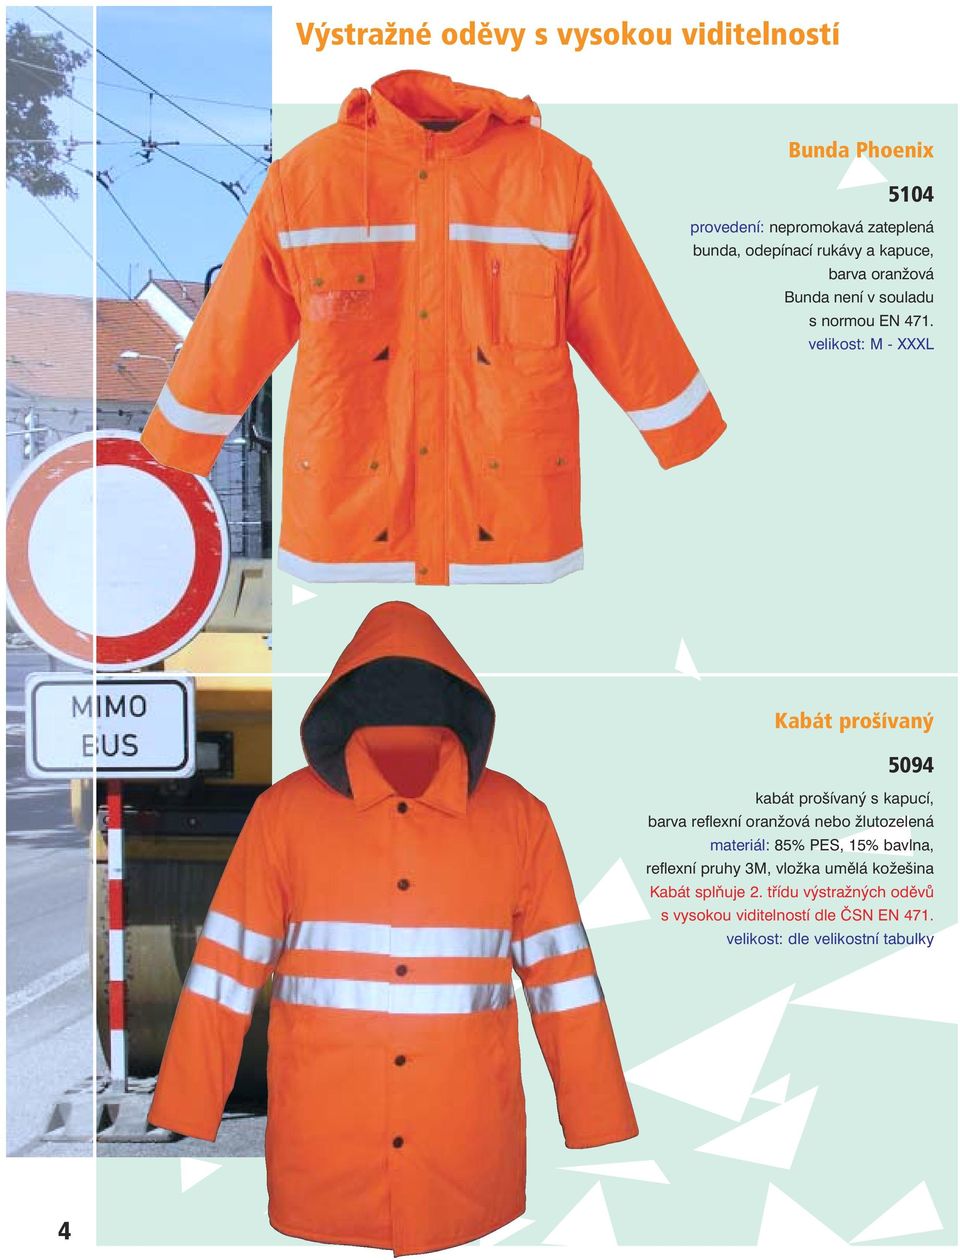 velikost: M - XXXL Kabát pro ívan 5094 kabát pro ívan s kapucí, barva reflexní oranïová nebo Ïlutozelená materiál: